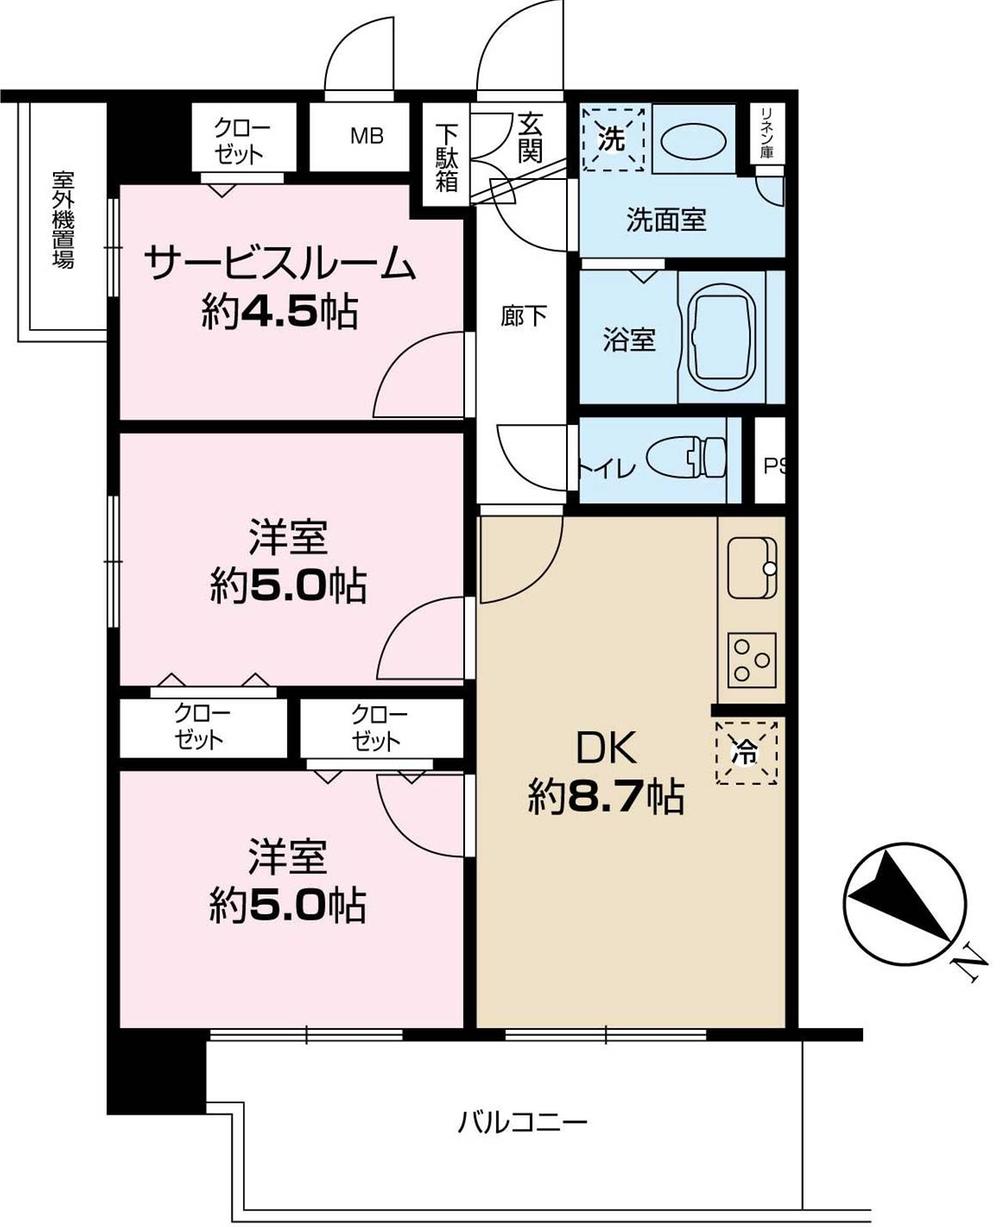 Floor plan. 2DK + S (storeroom), Price 25,800,000 yen, Occupied area 54.06 sq m , Balcony area 9.58 sq m